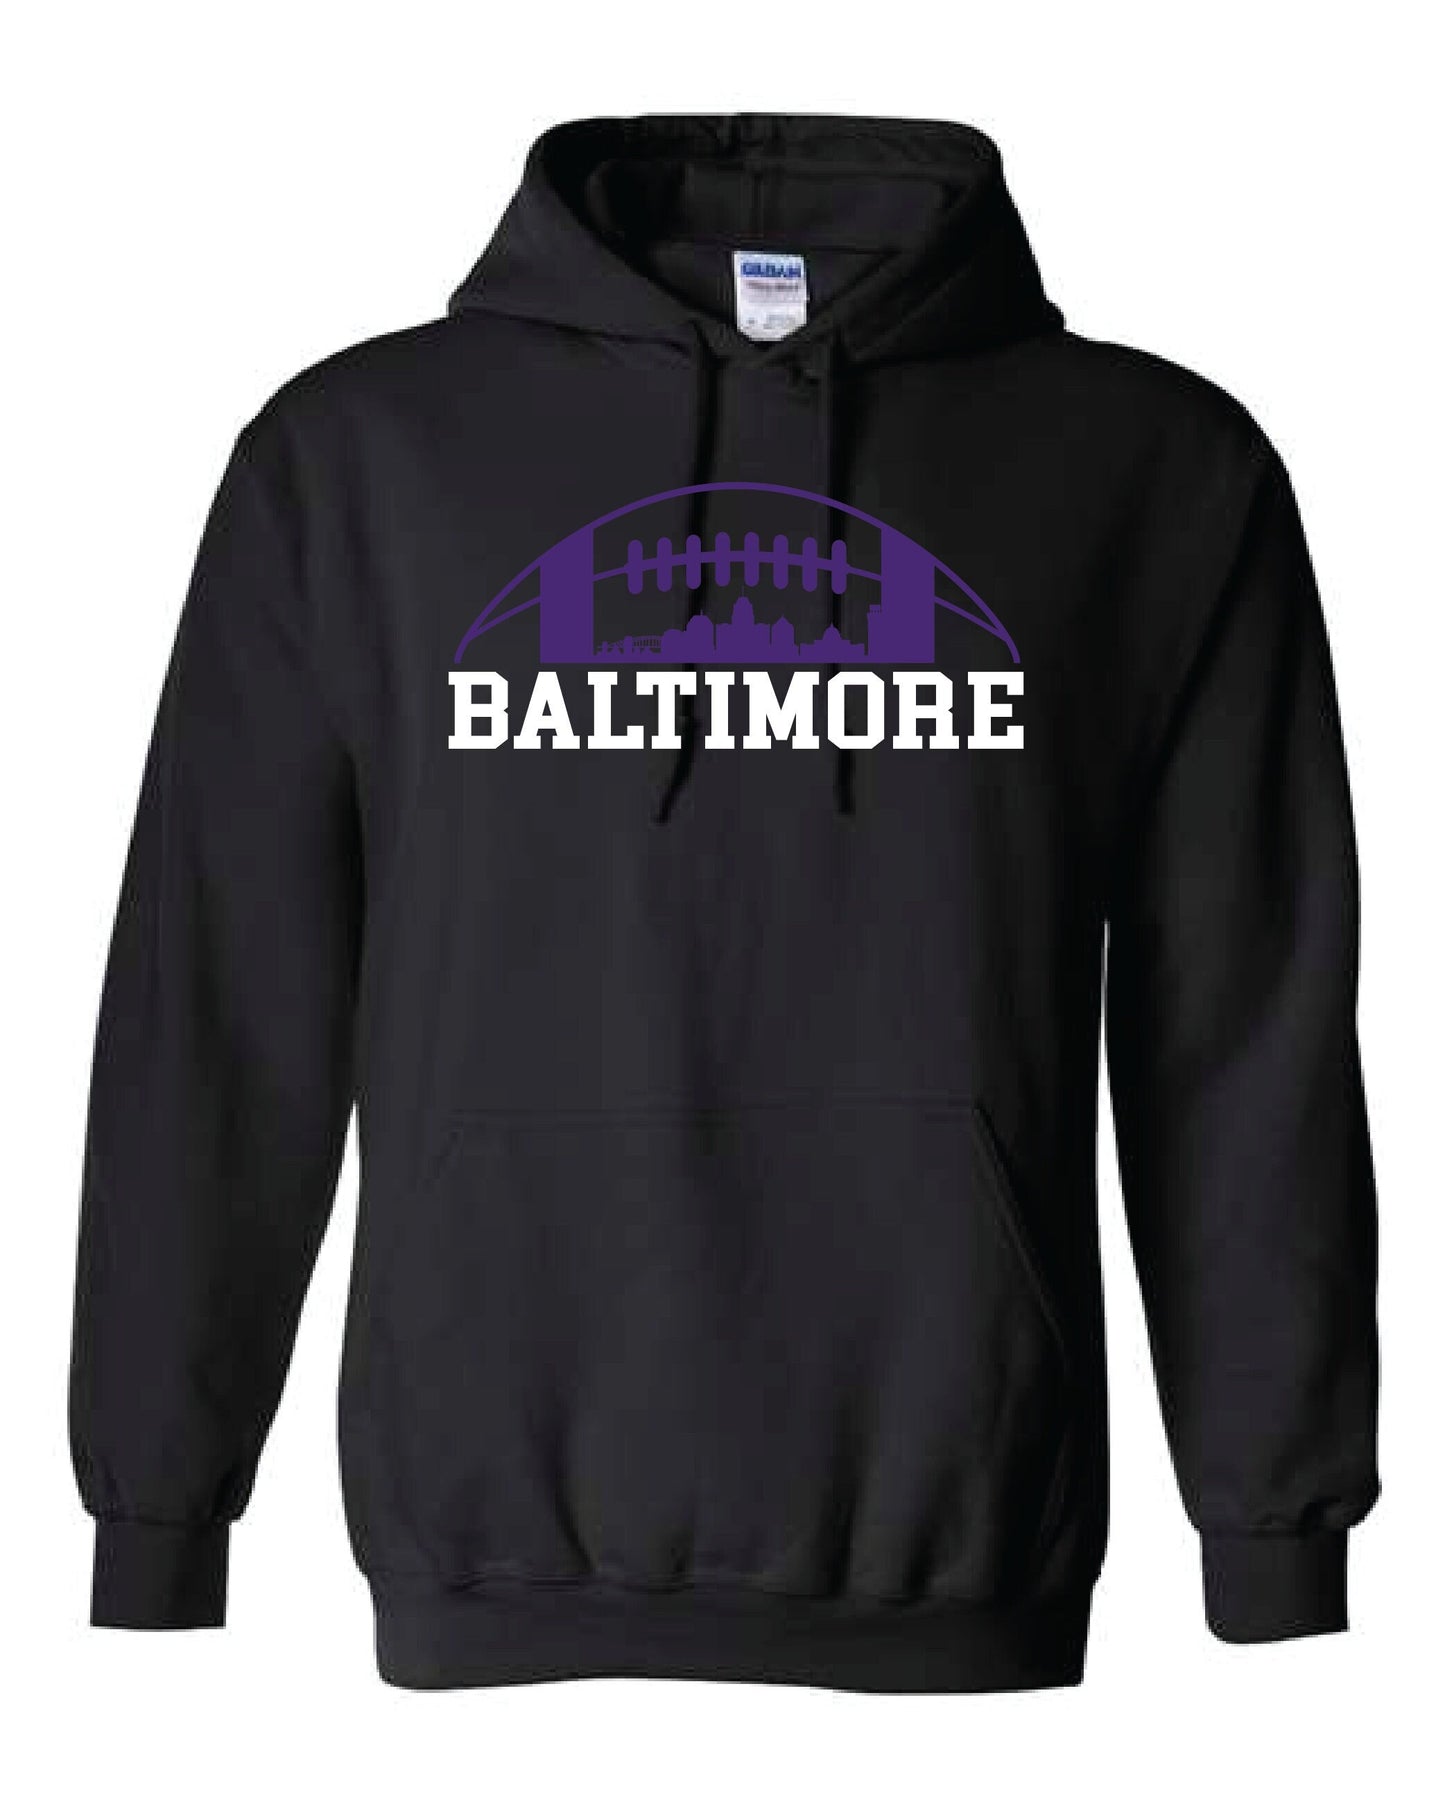 Baltimore Football Skyline Hoodie - Football Fans Hoodie - Football Fan Gift - Baltimore Fan Gift - Rep your football team - Rep your City